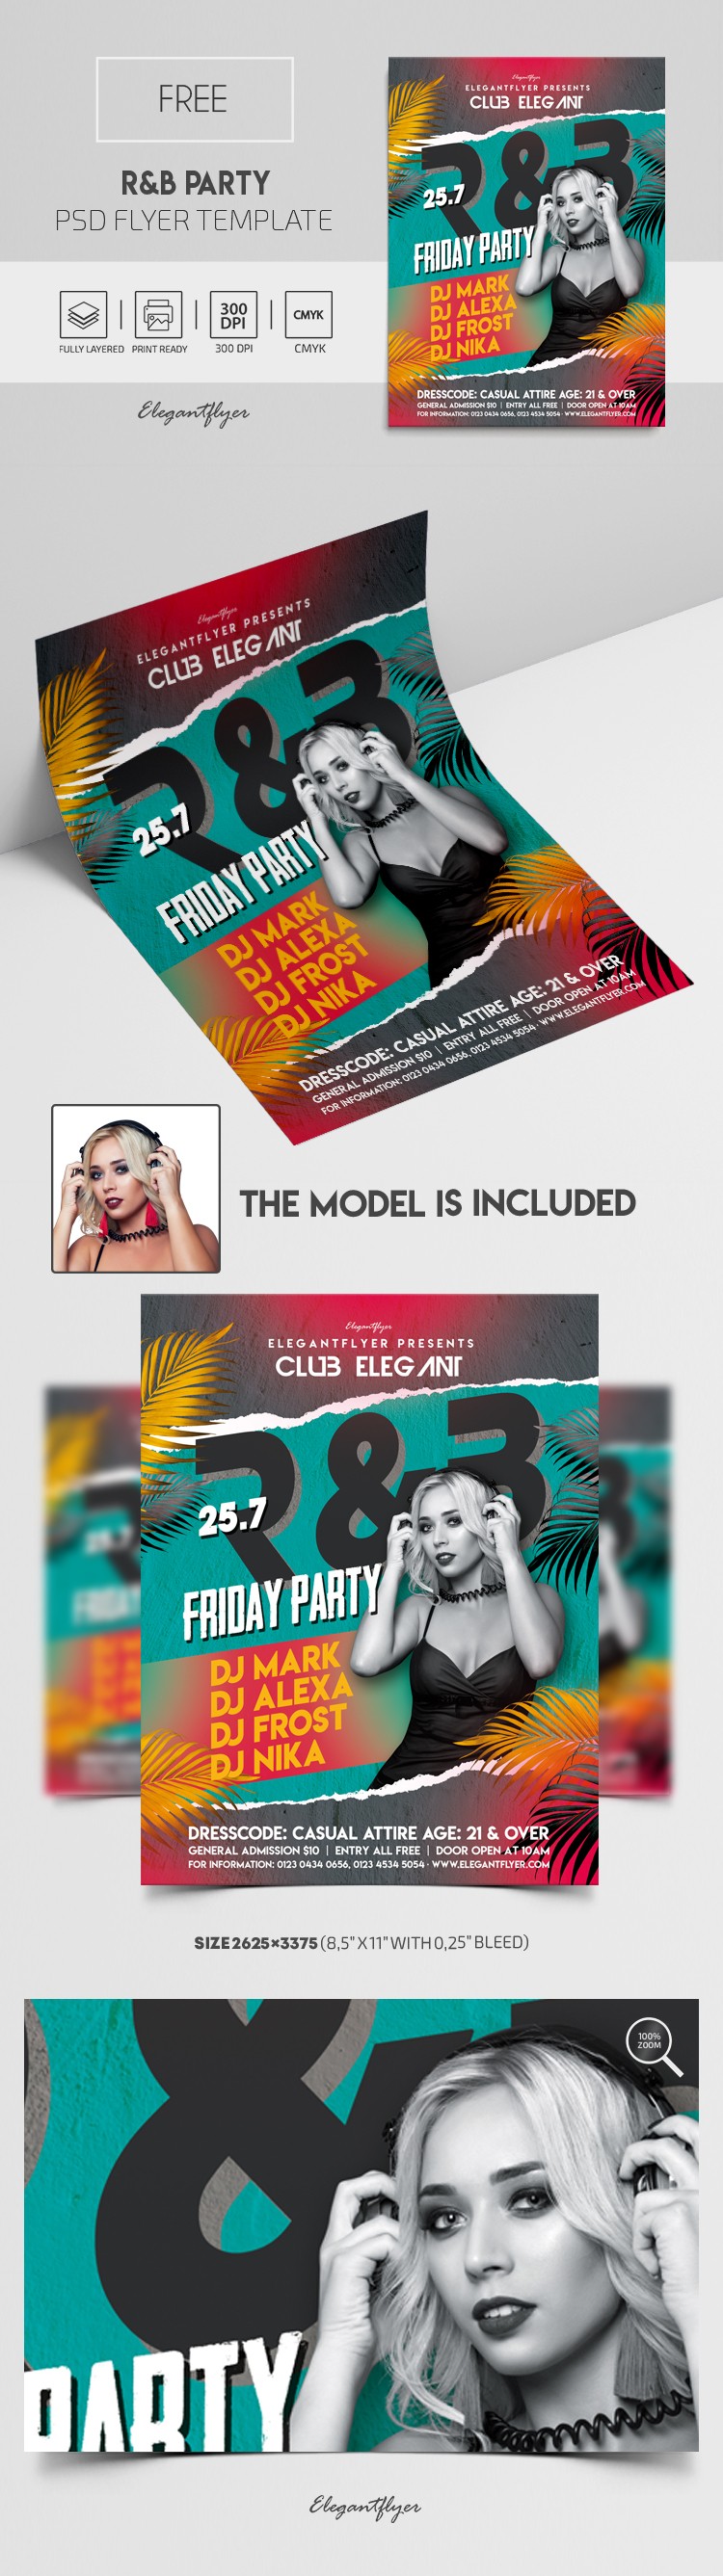 R&B Party Flyer by ElegantFlyer